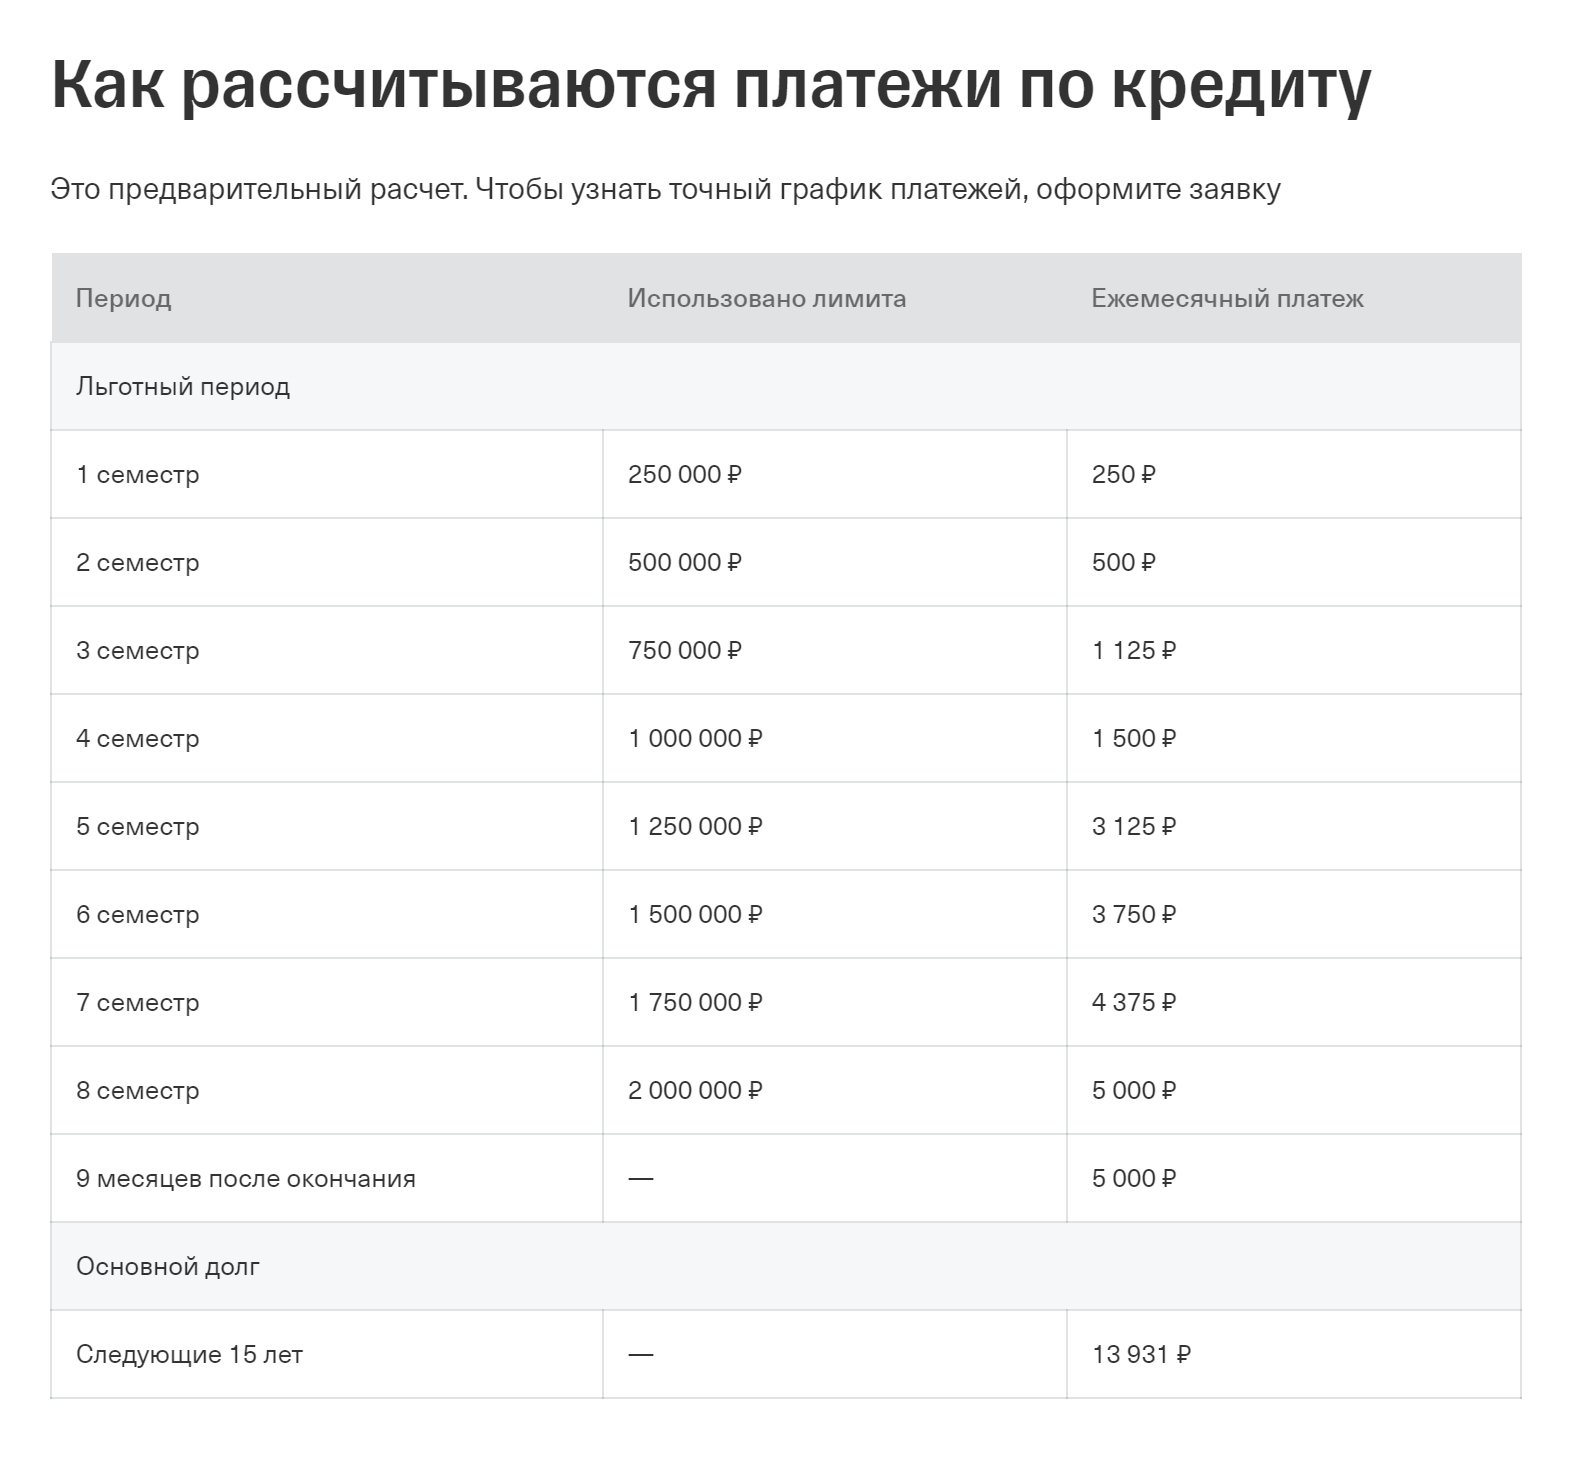 Разбивка платежей по кредиту. Источник: tbank.ru